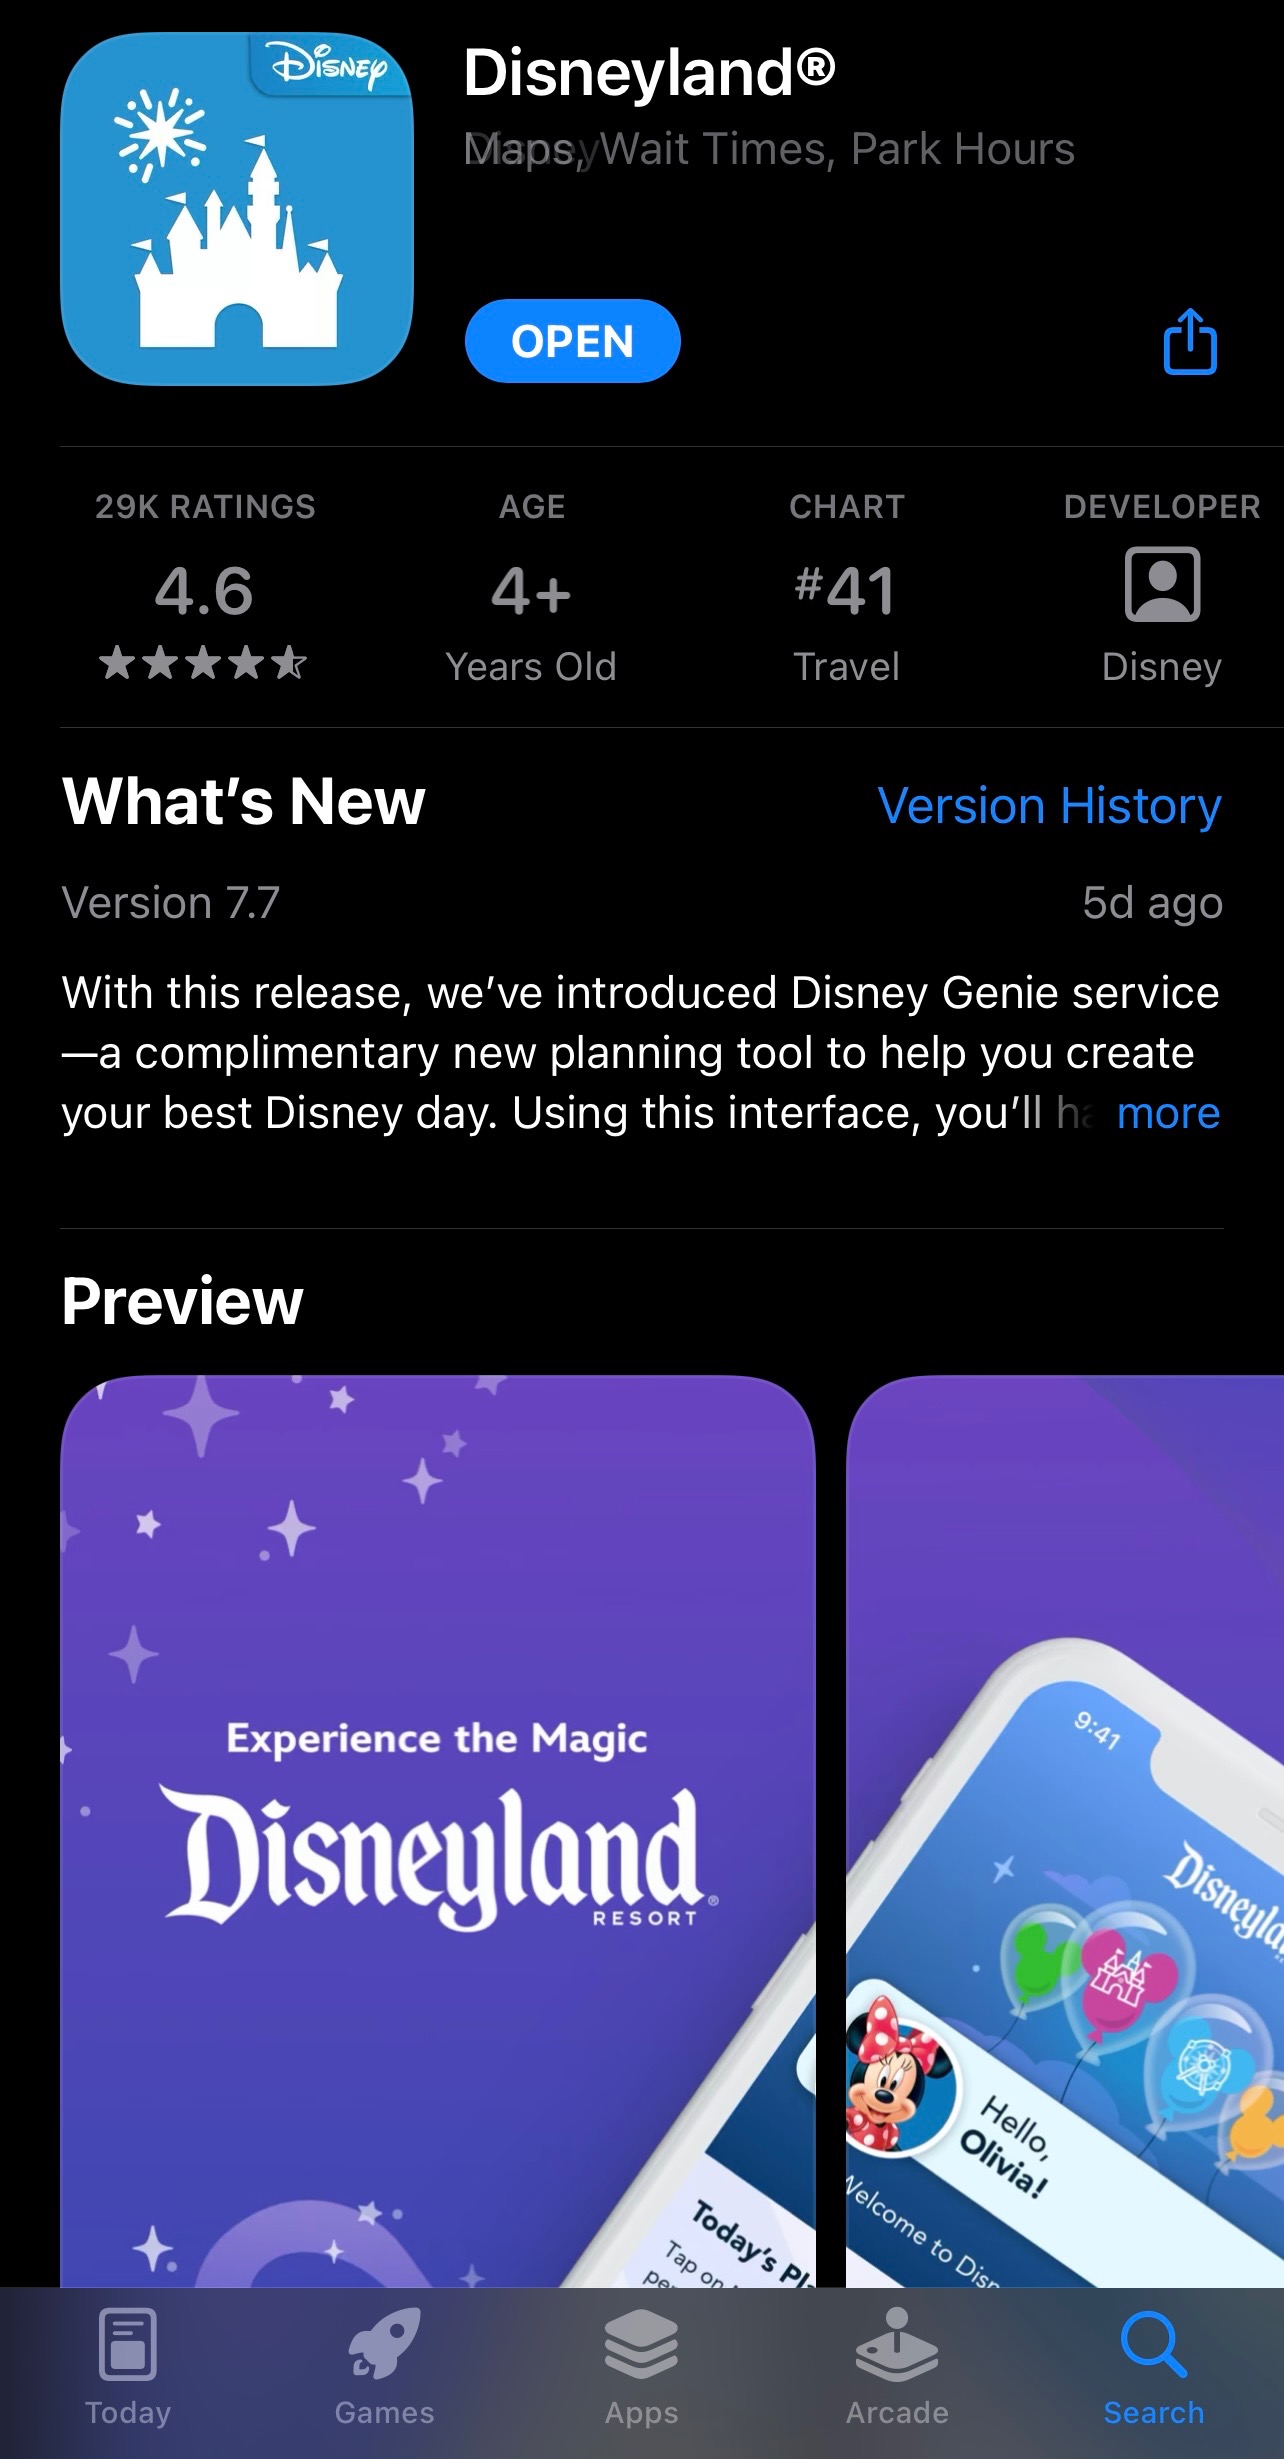 The Disneyland App